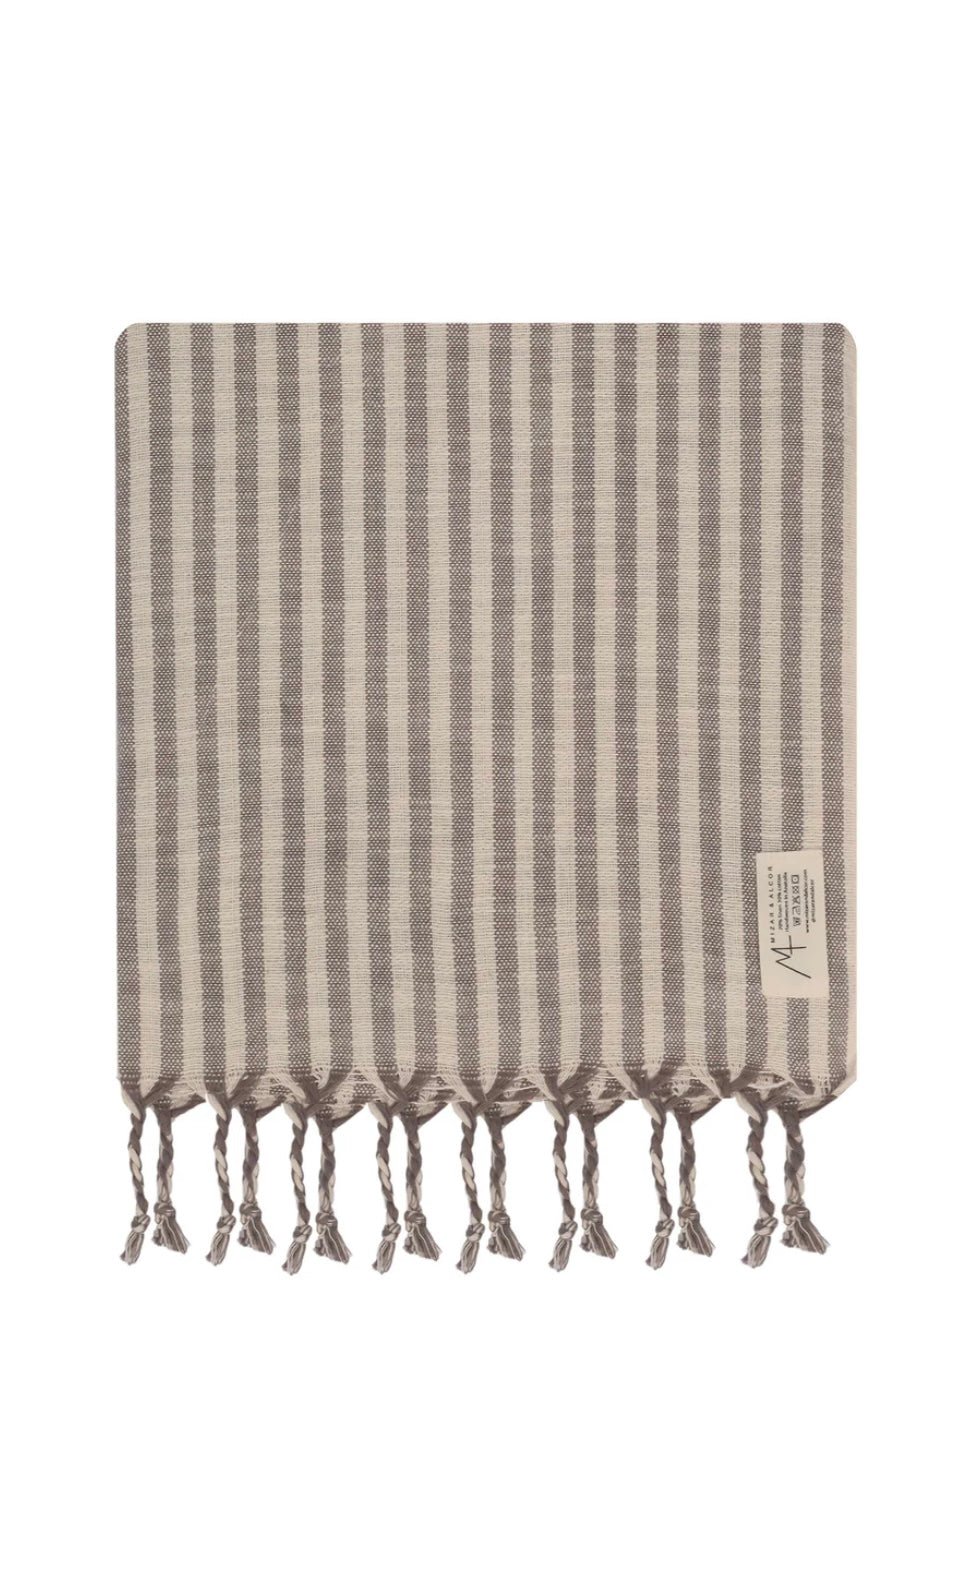 Natural Anatolia Handwoven Cotton/Linen Towels, More Colors